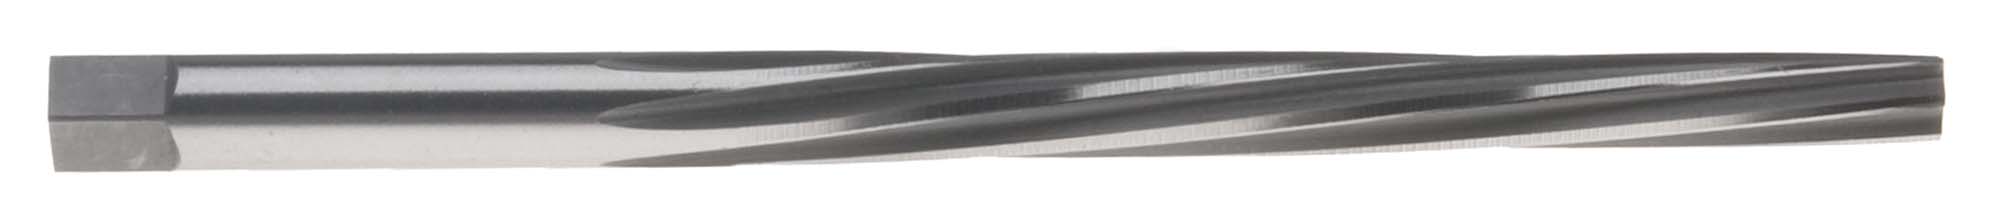 #6 Spiral Flute Taper Pin Reamer, High Speed Steel